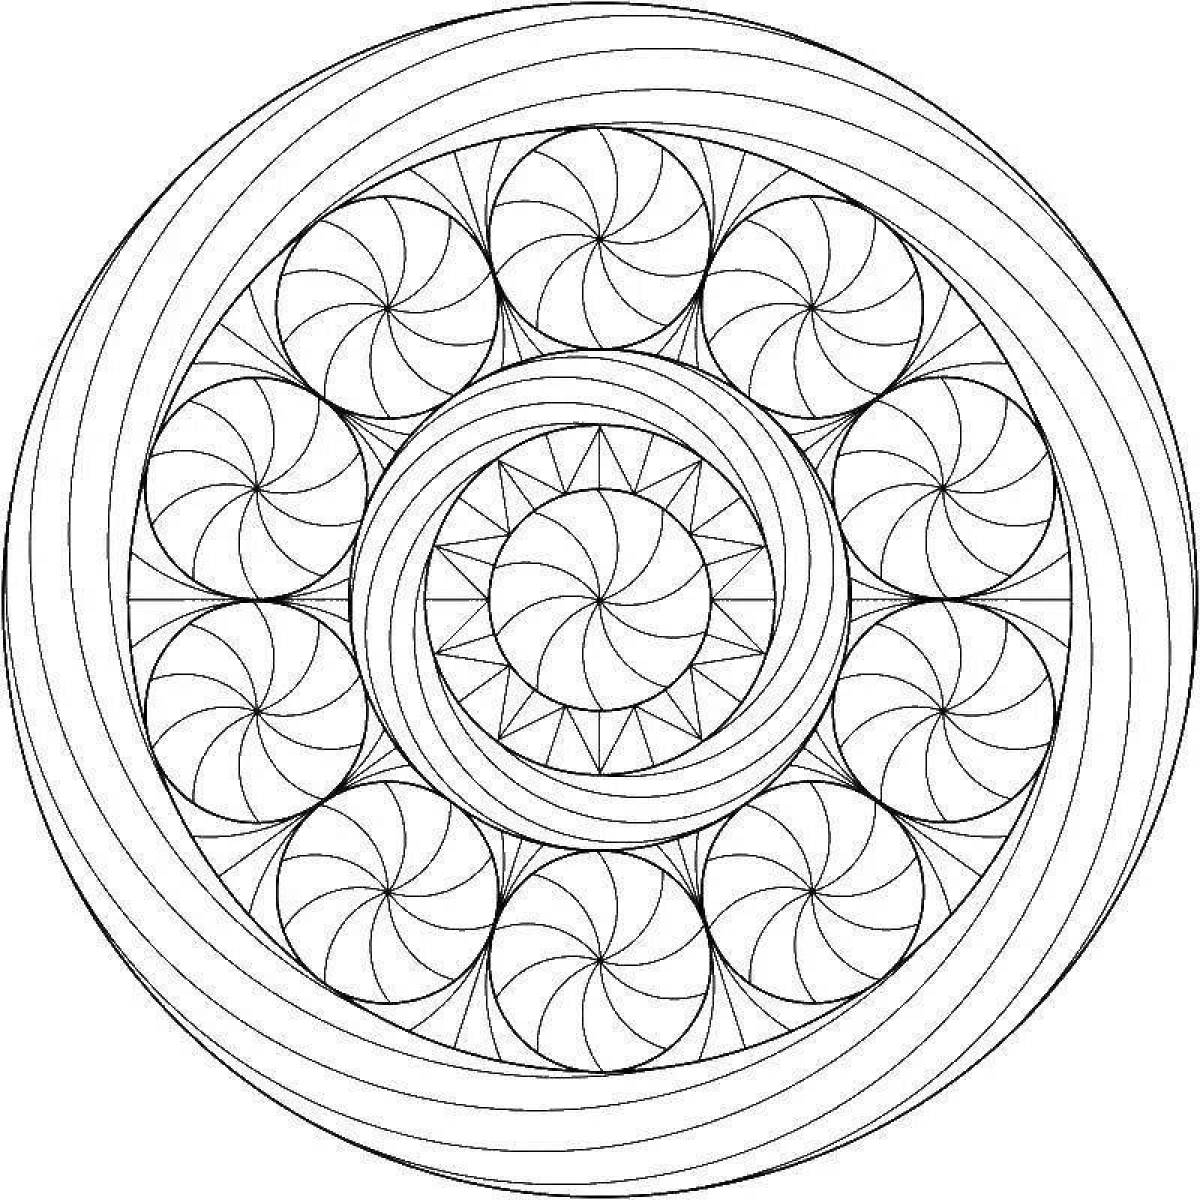 Gorgeous circular pattern coloring page